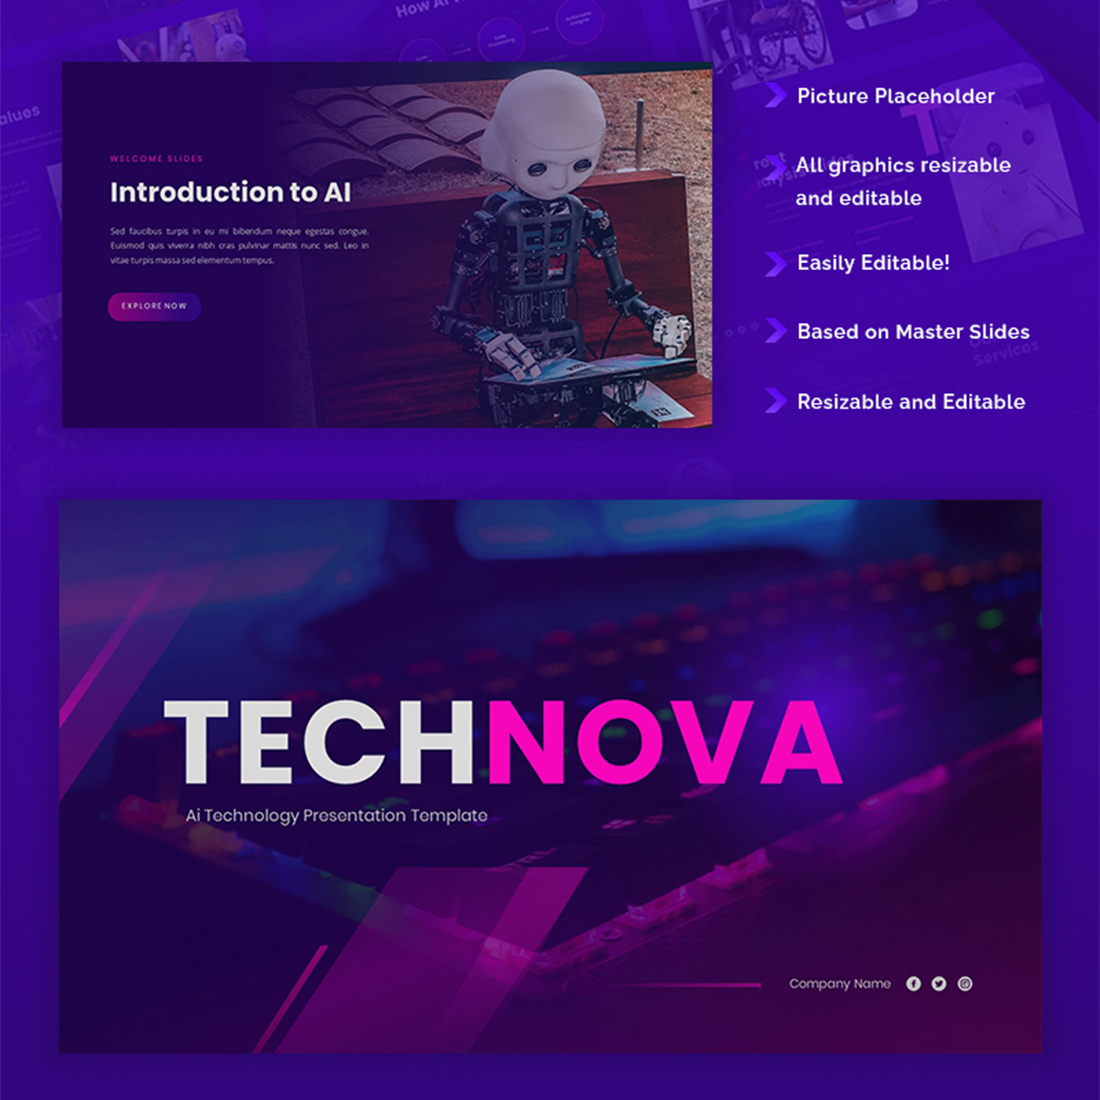 Technova - AI Technology PowerPoint Template preview image.